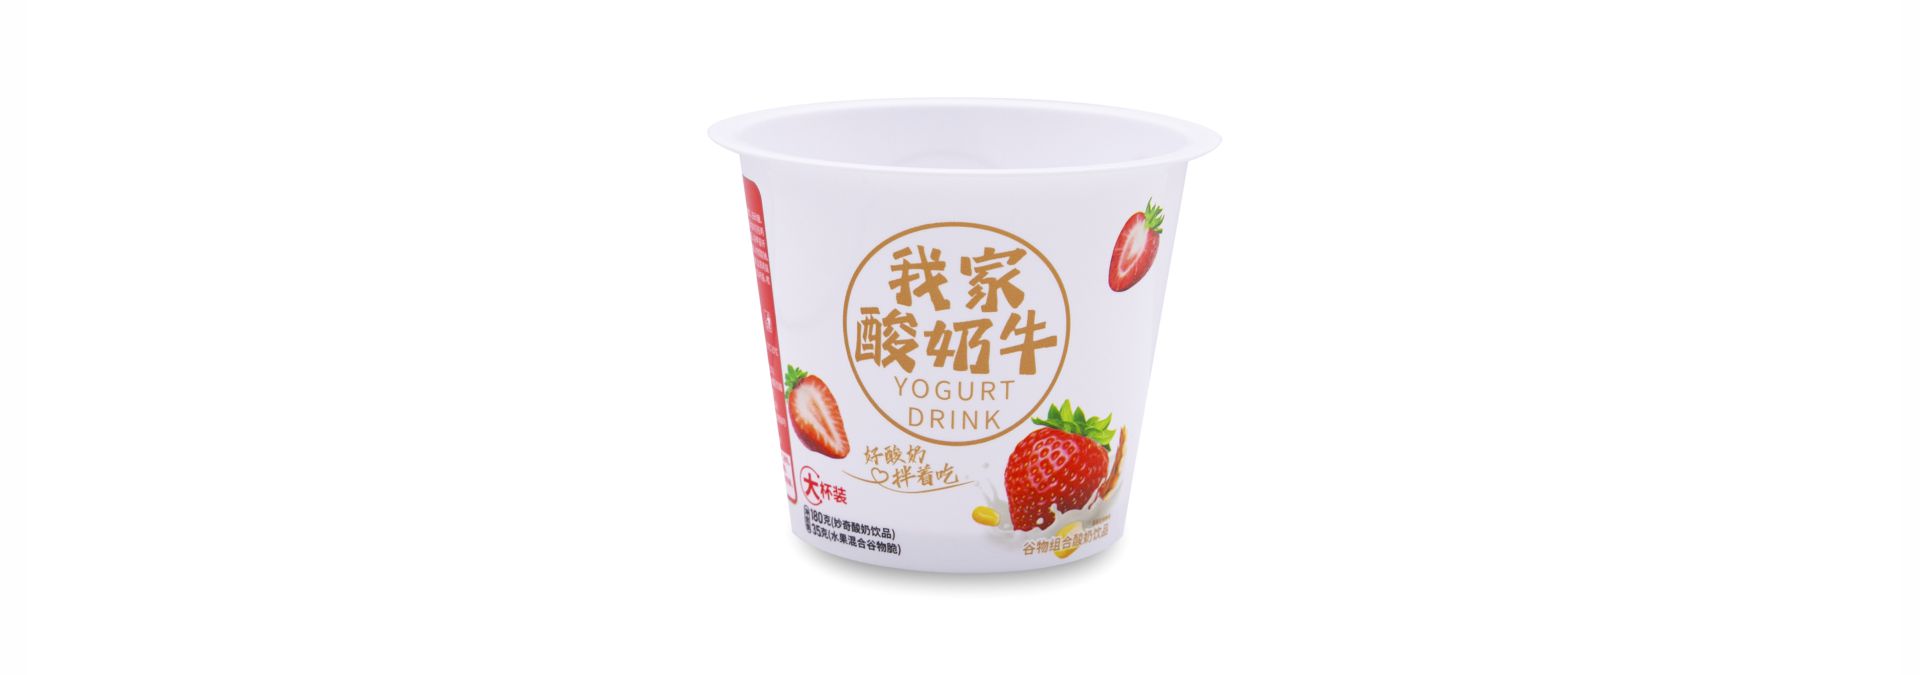 98-78-300g yogurt cup